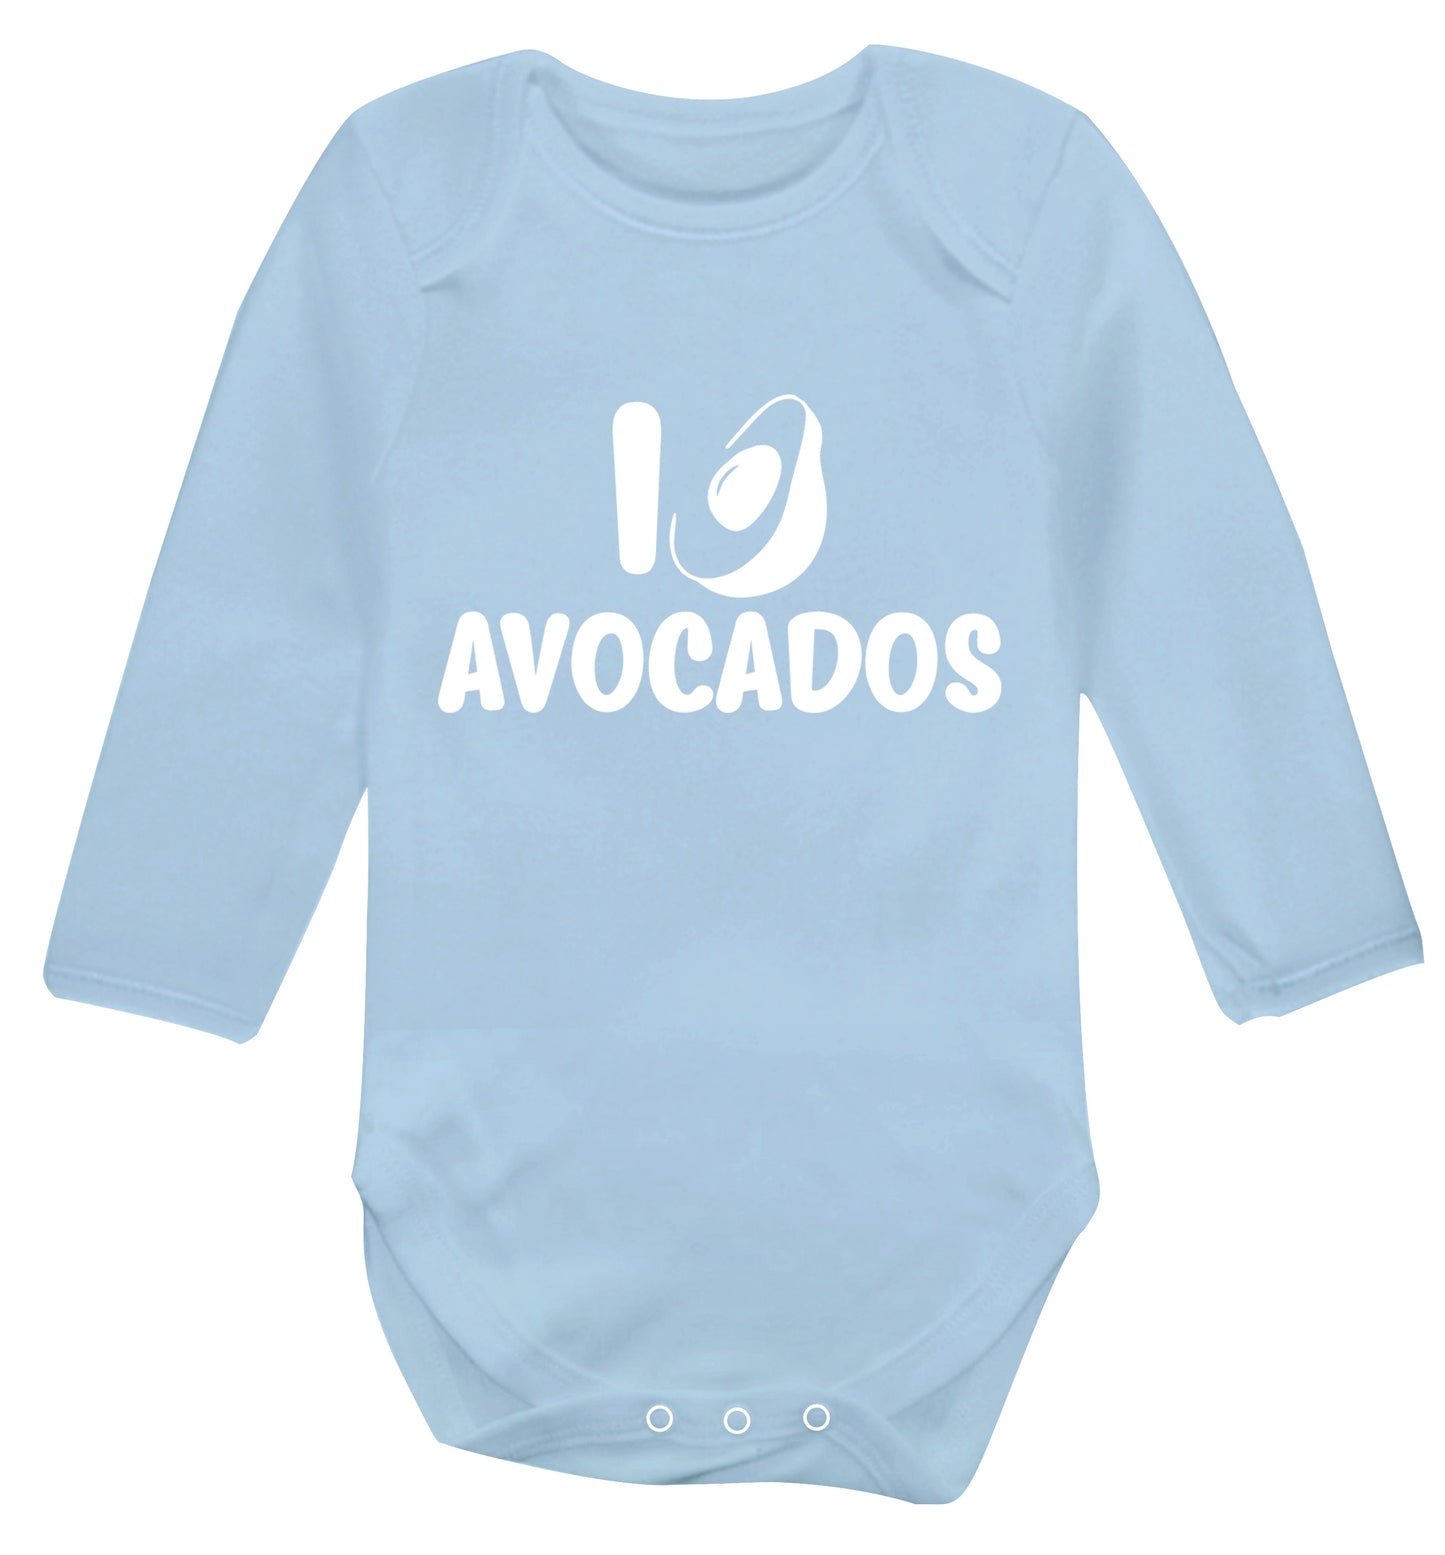 I love avocados Baby Vest long sleeved pale blue 6-12 months